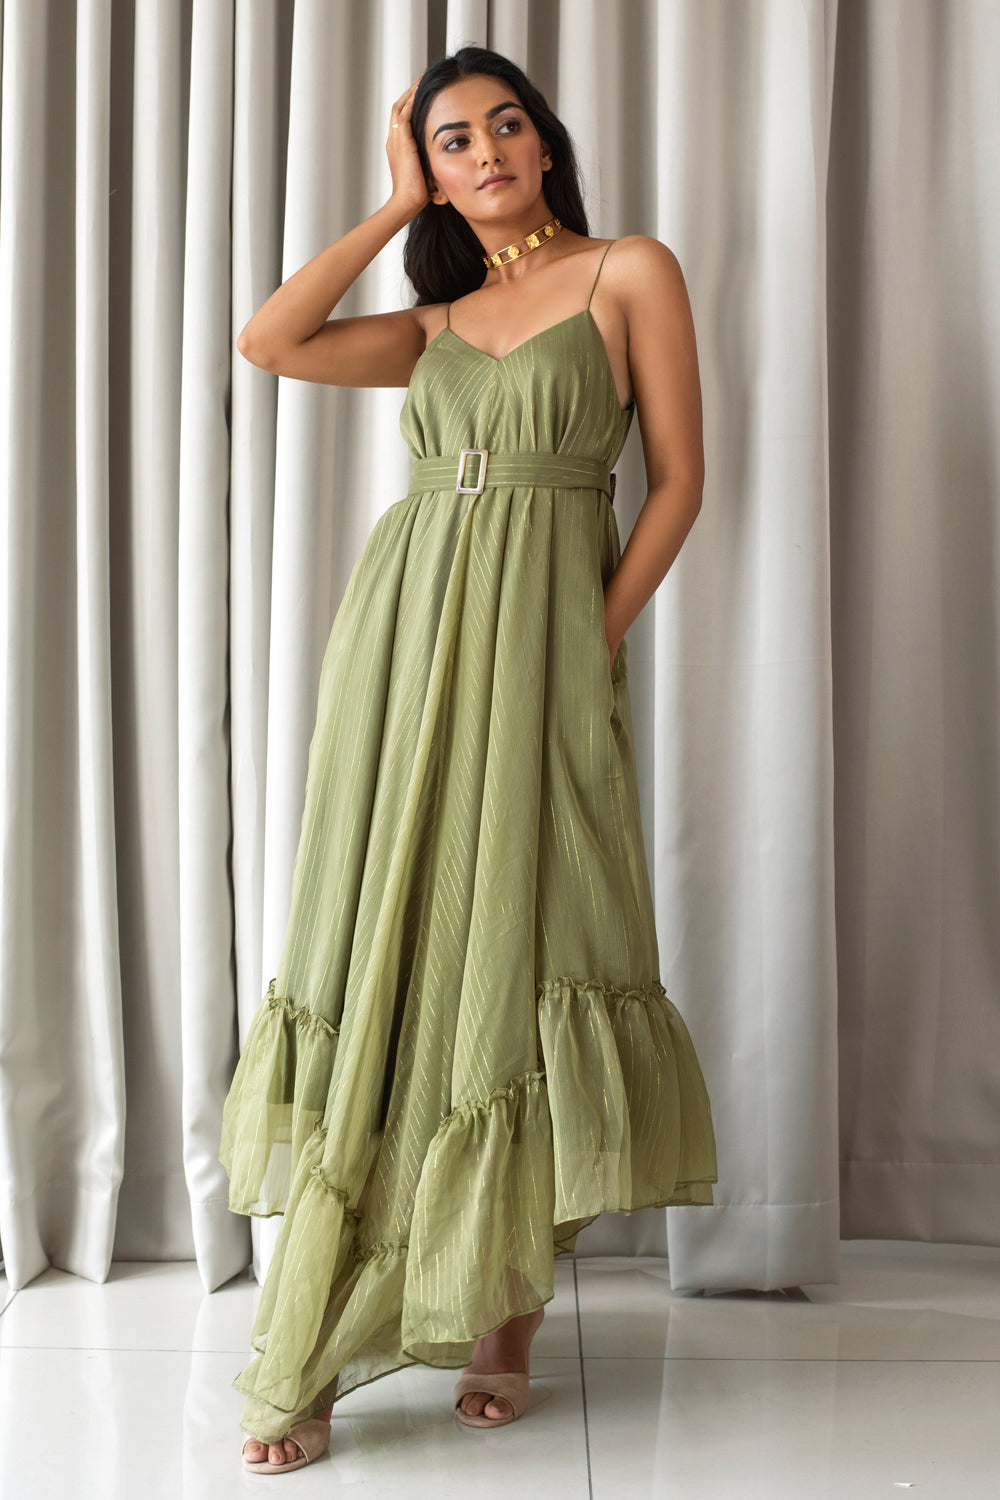 Olive green dress